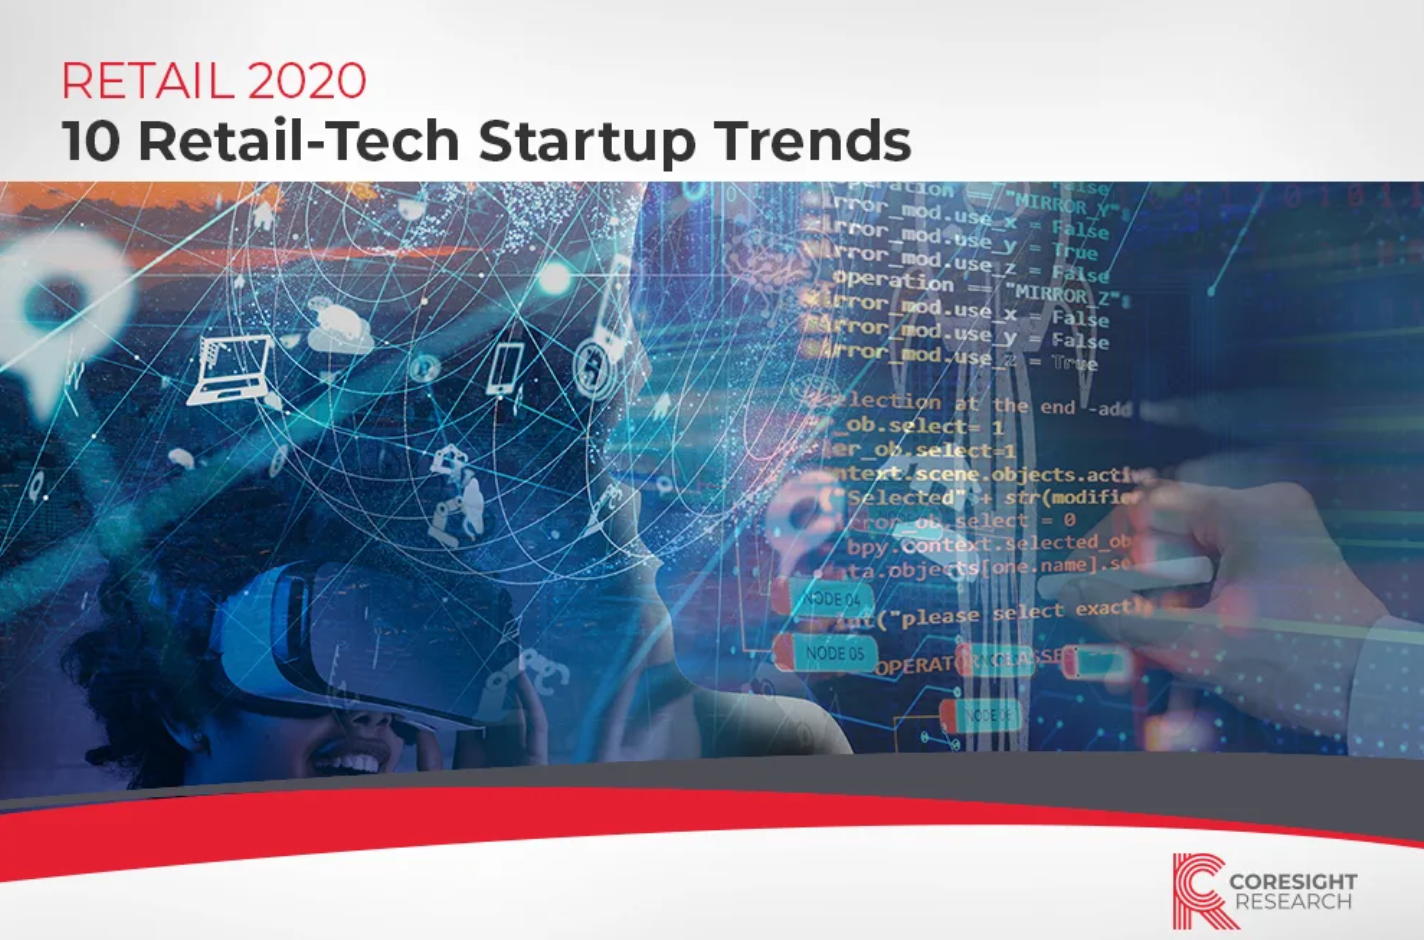 Retail 2020: 10 Retail-Tech Startup Trends - deals in retail